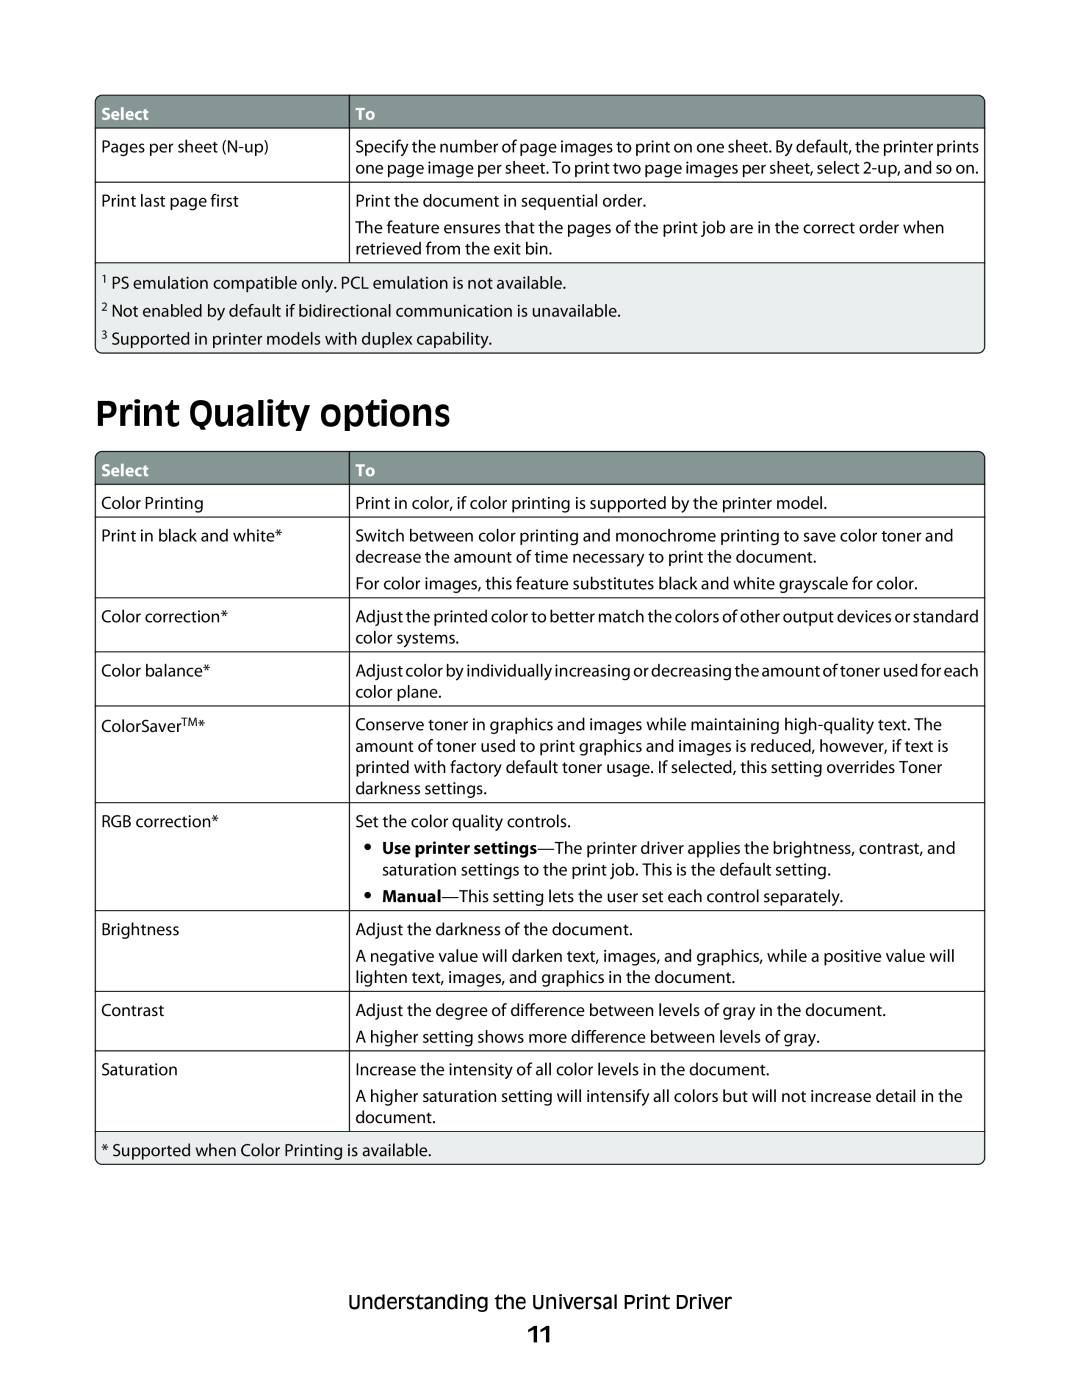 Lexmark Universal Driver manual Print Quality options, Select 